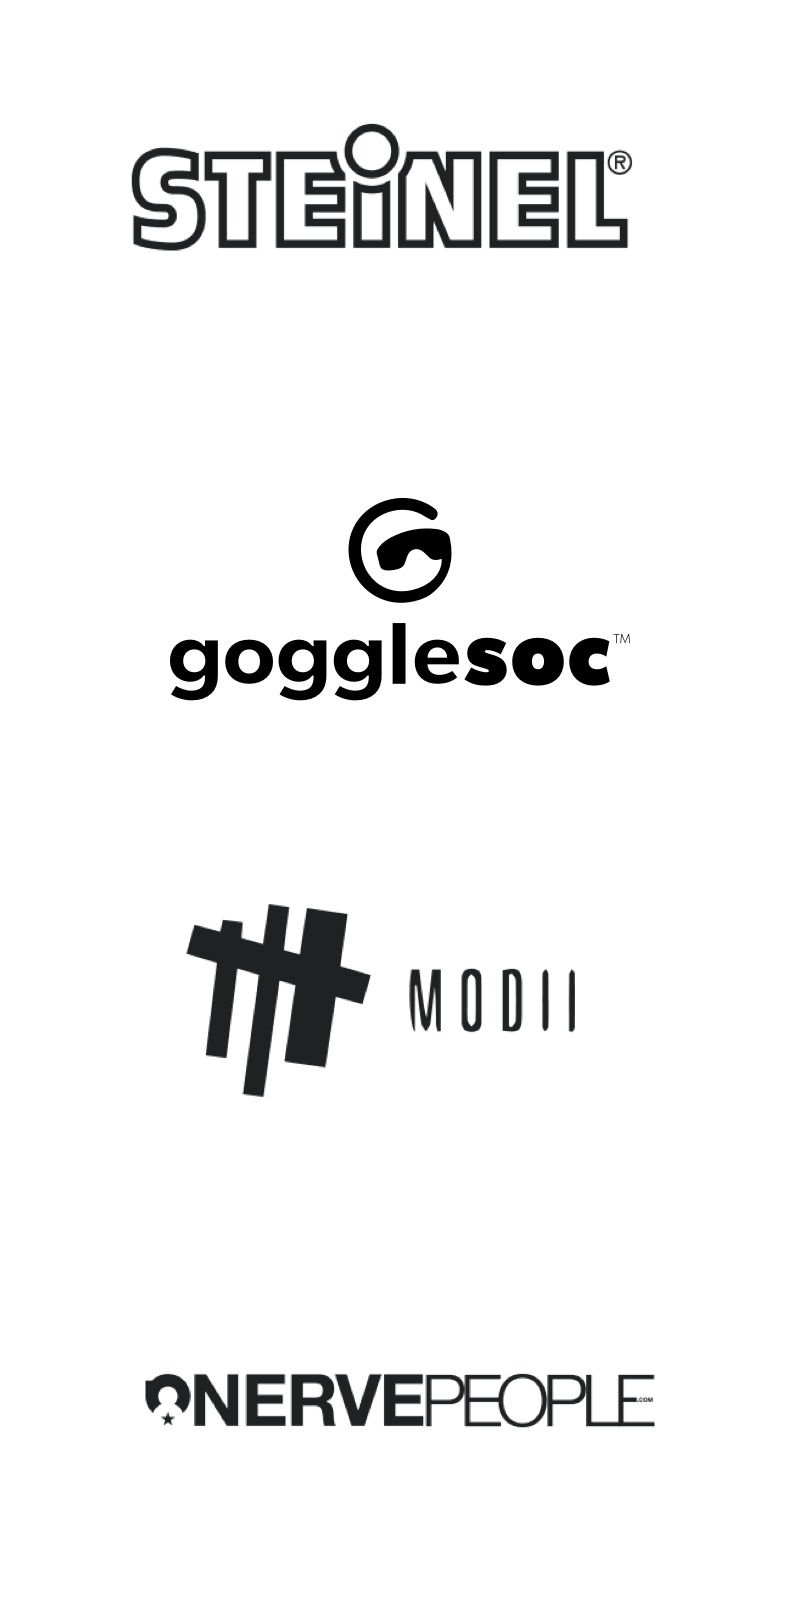 Faze Designs - Steinel, GoogleSoc, Modii, NervePeople